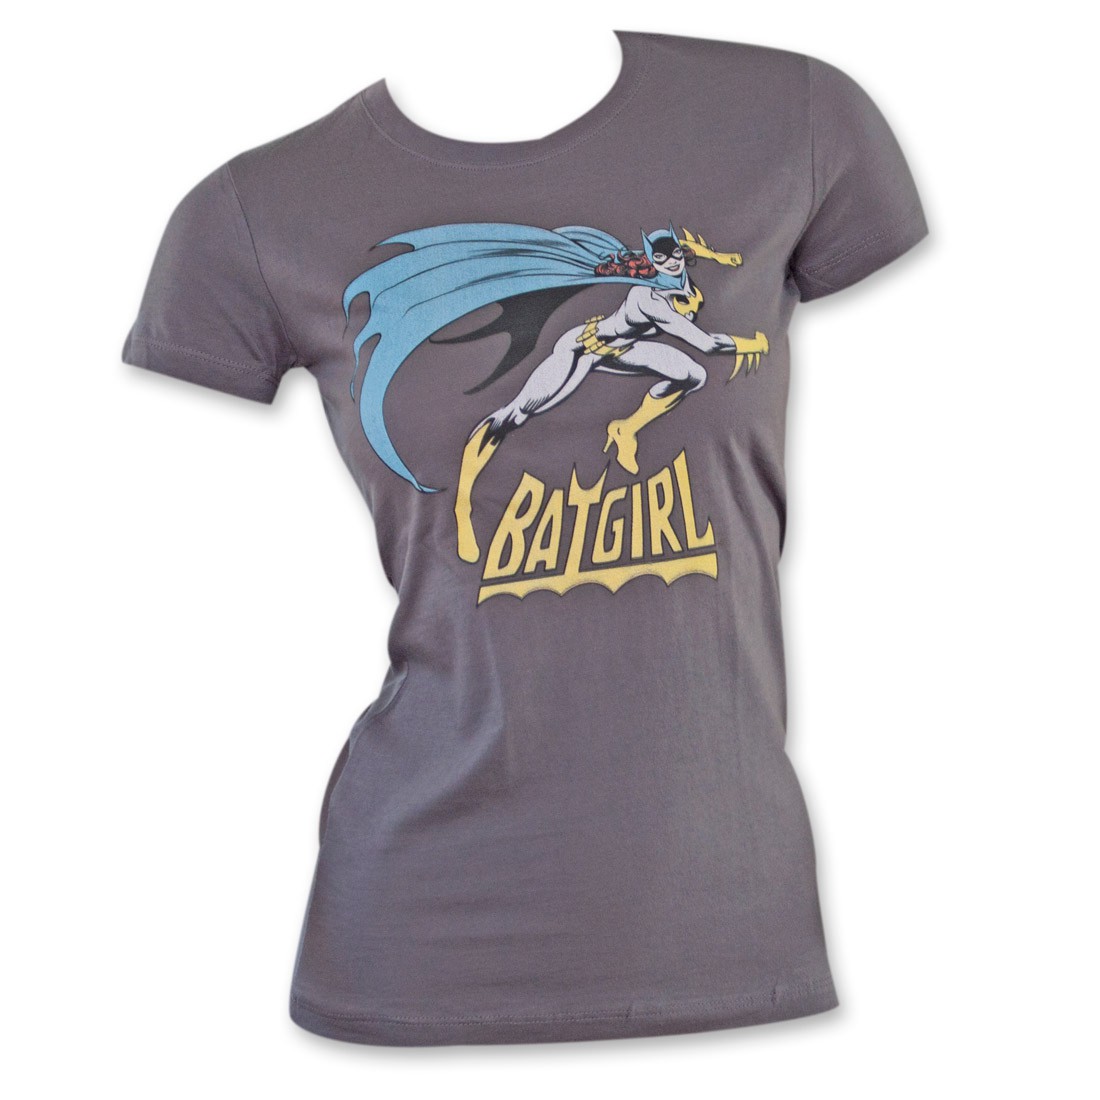 Batgirl Women's T-Shirt - Grey